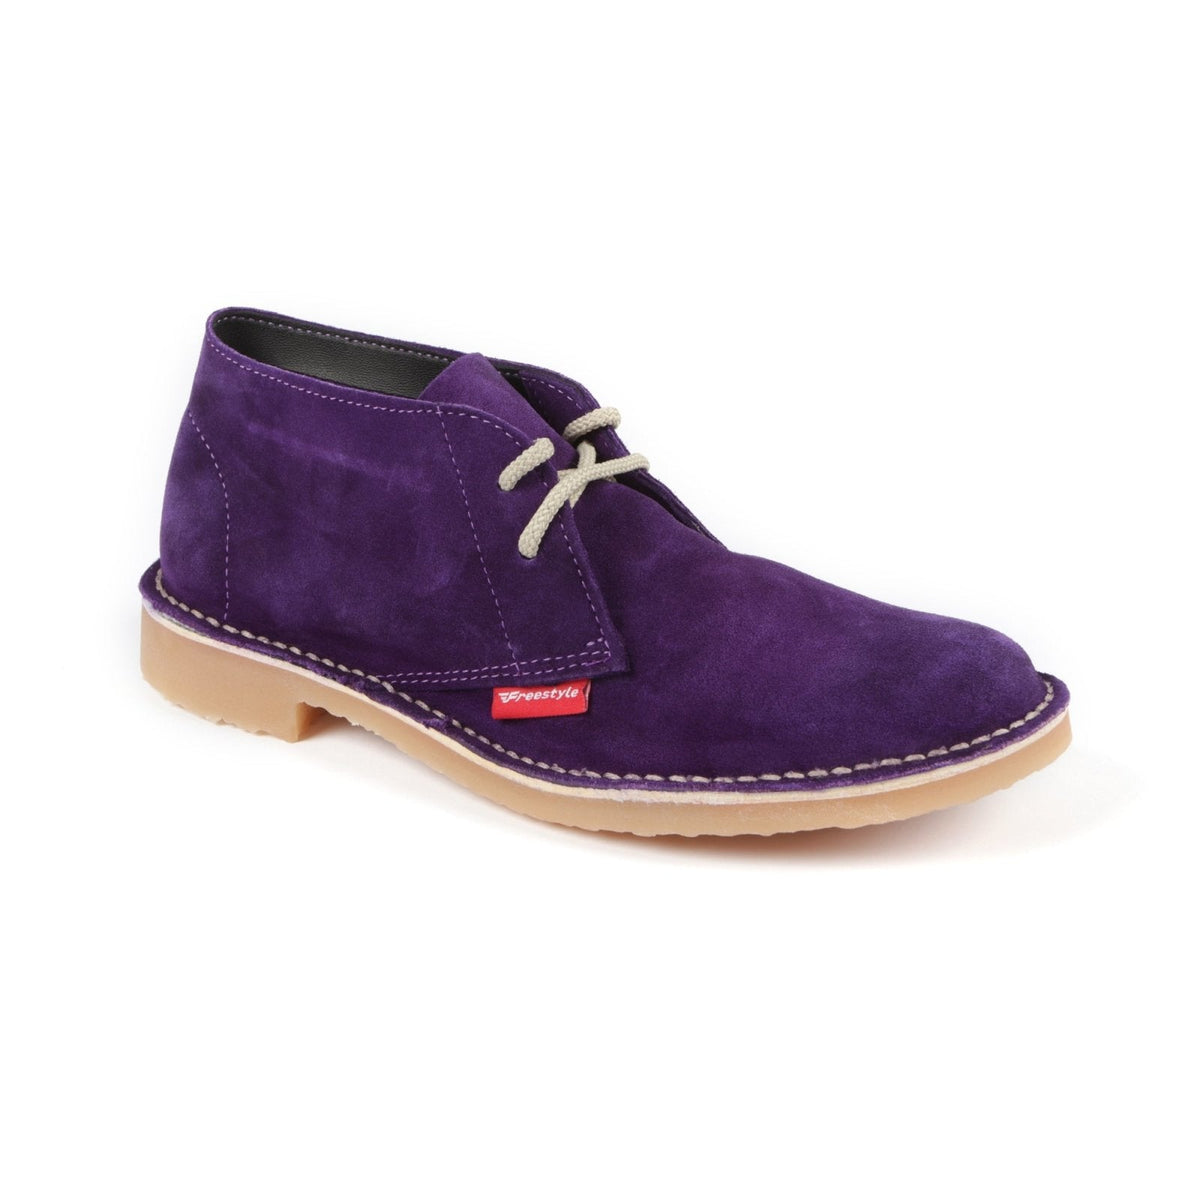 Hunter Vellie Unisex Premium Suede Veldskoen - Bright Purple - Freestyle SA Proudly local leather boots veldskoens vellies leather shoes suede veldskoens